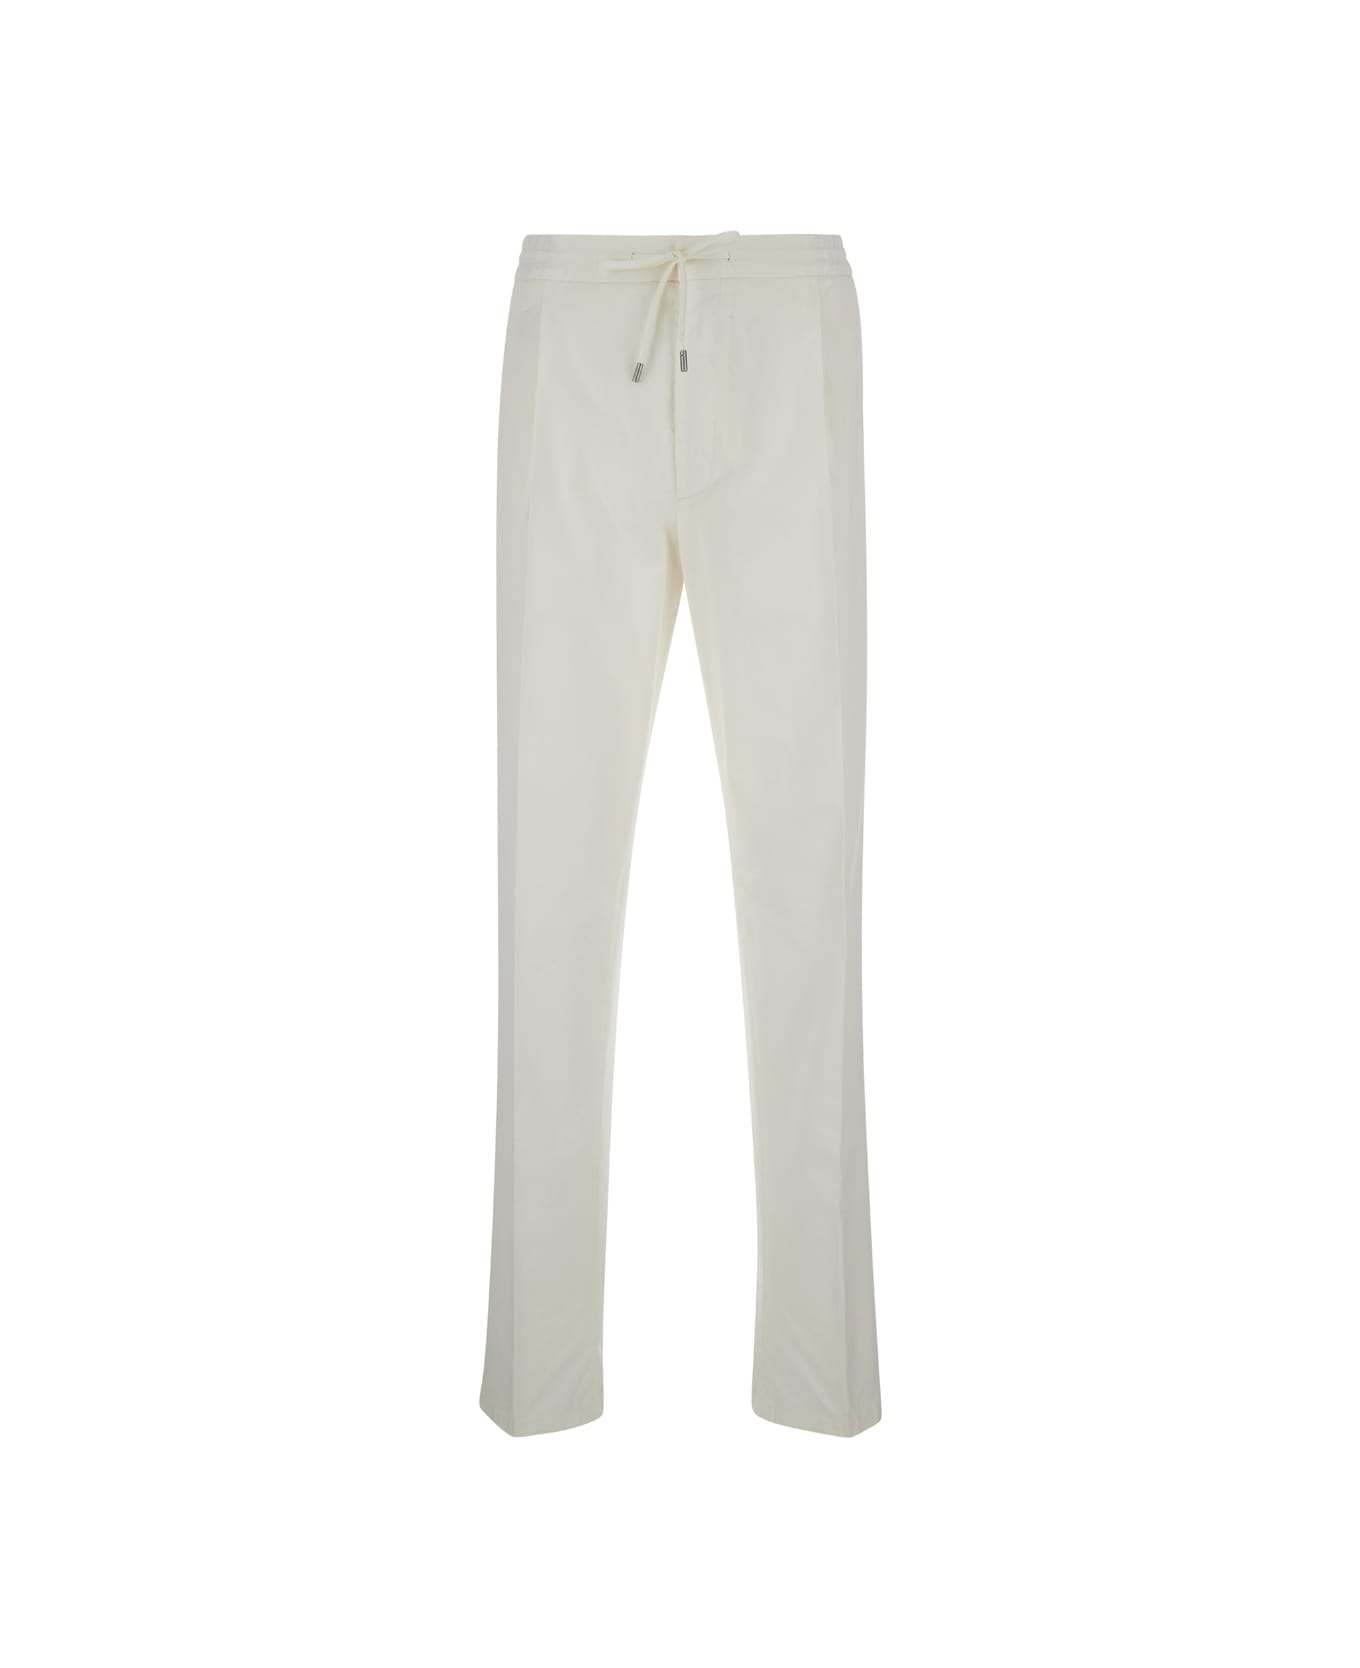 Lardini White Drawstring Tapered Trousers In Cotton Blend Man - White ボトムス